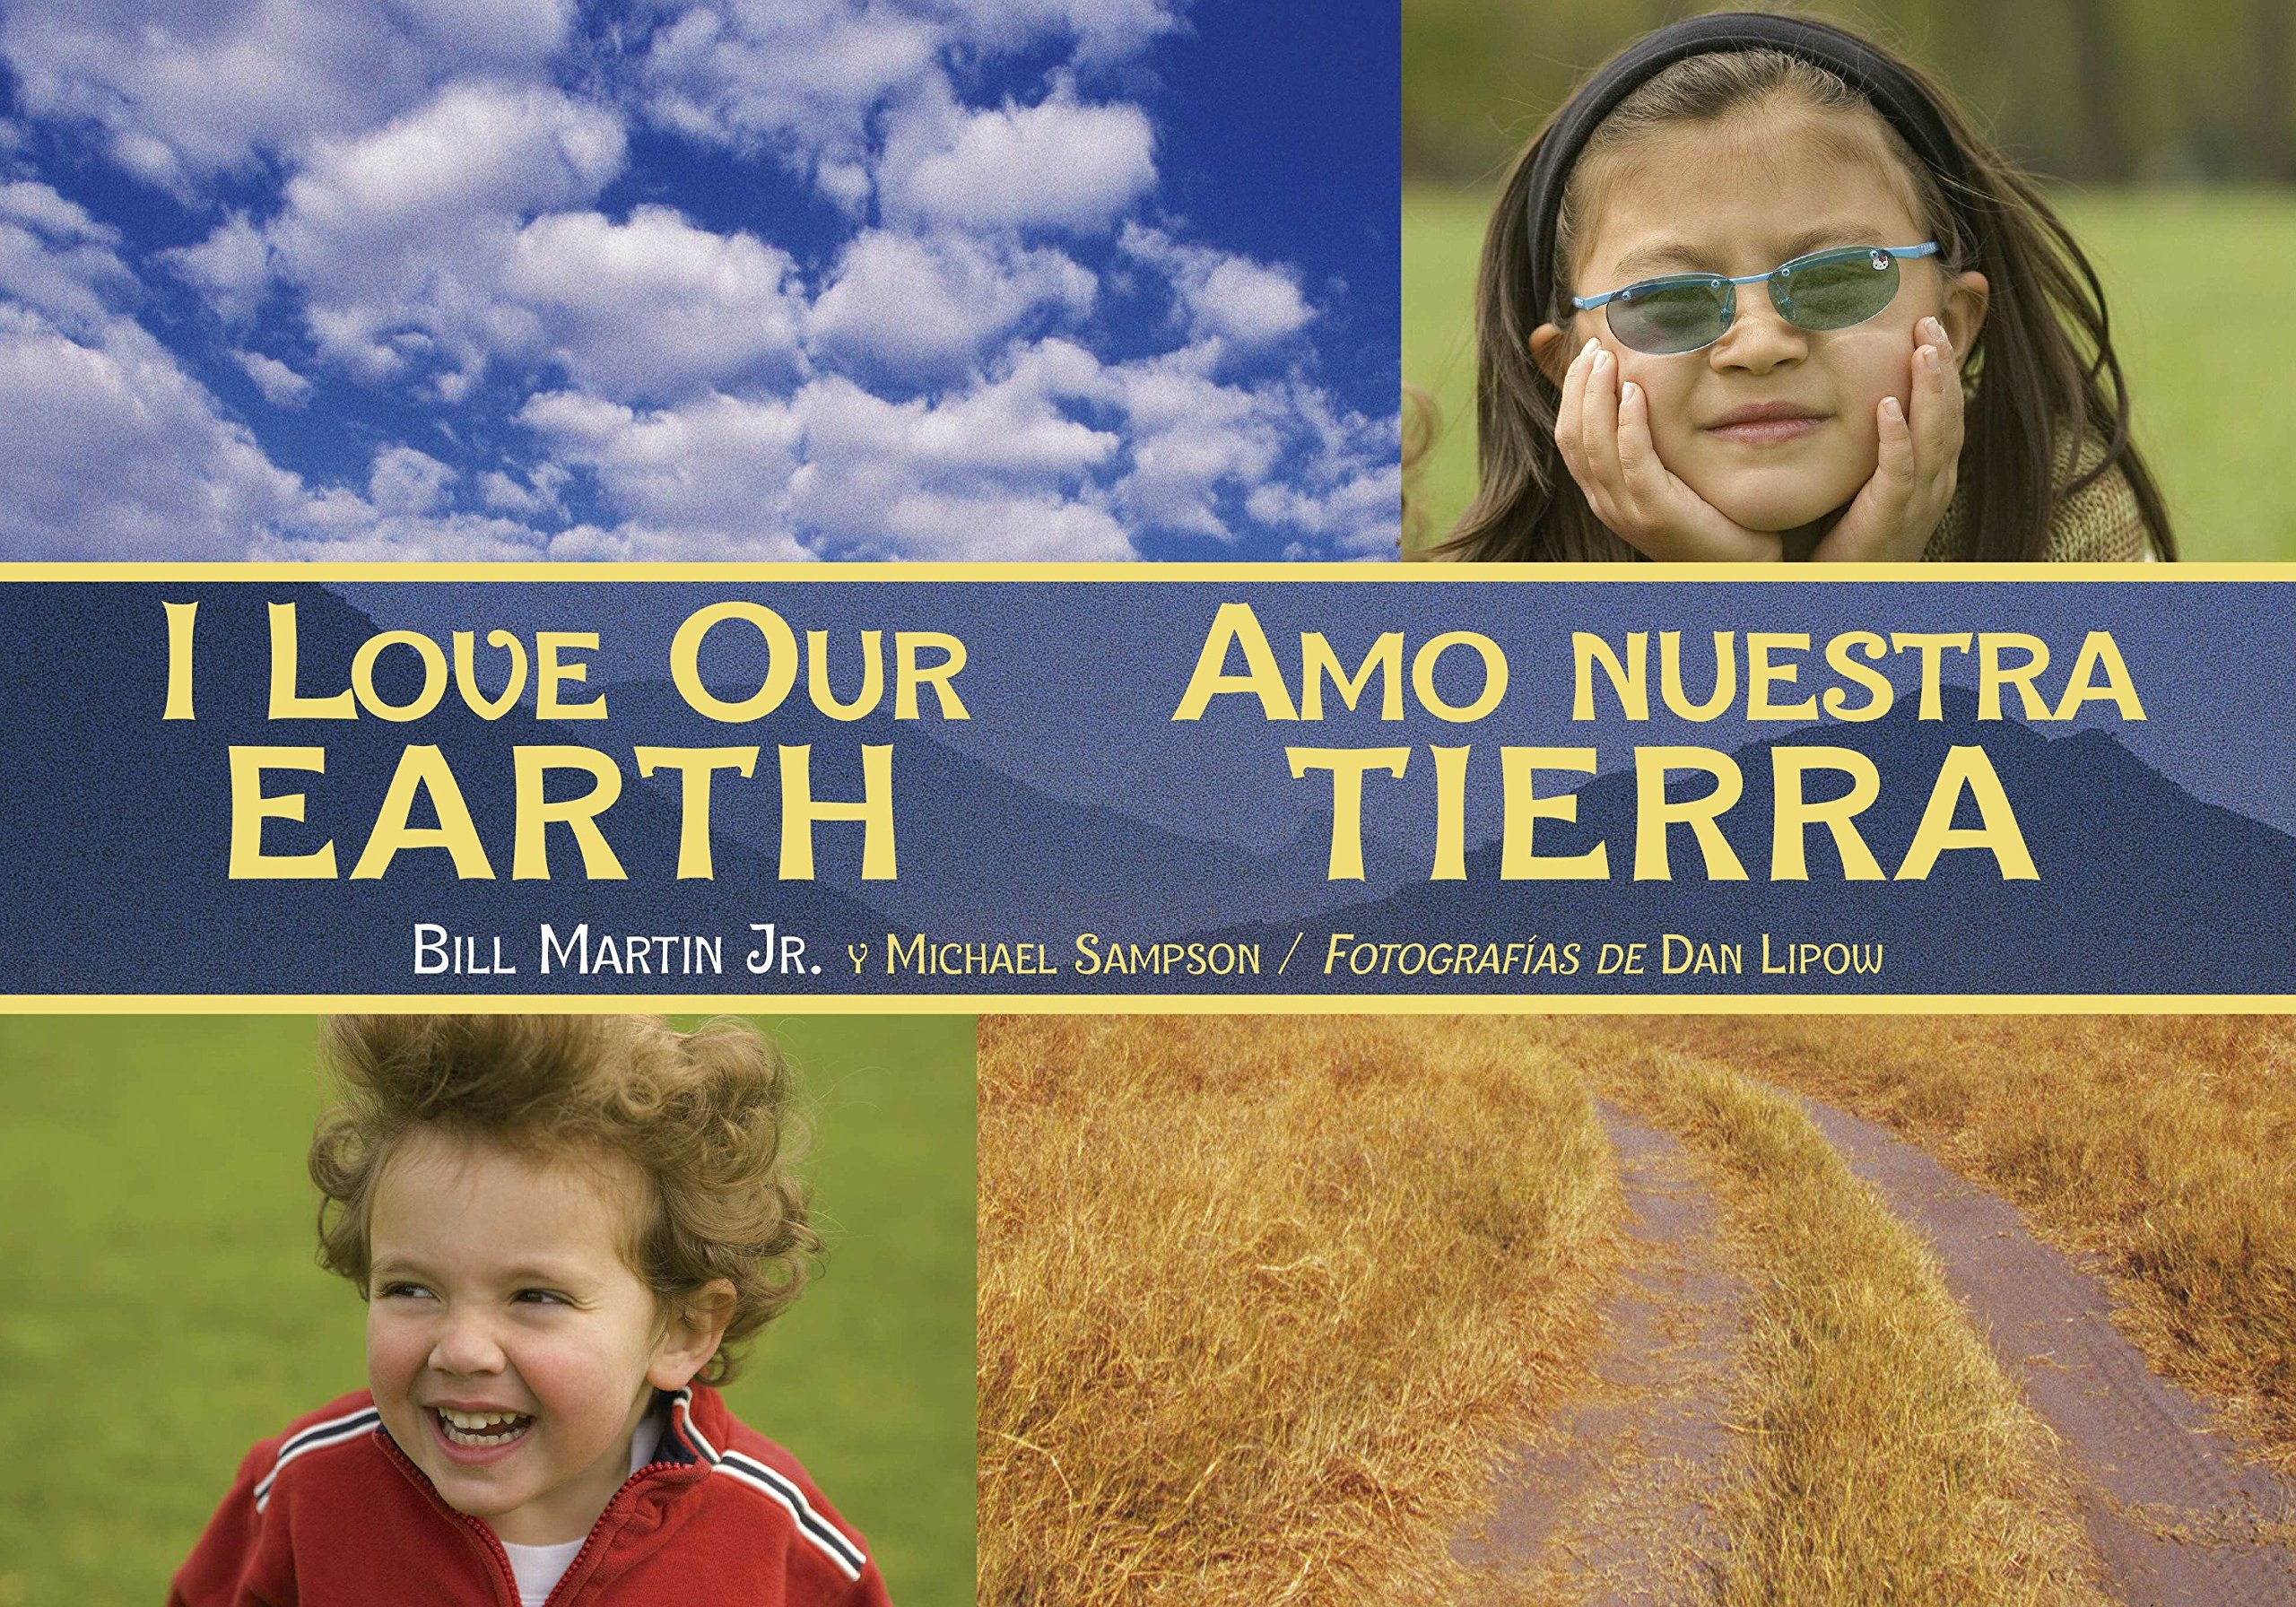 I Love Our Earth / Amo Nuestra Tierra